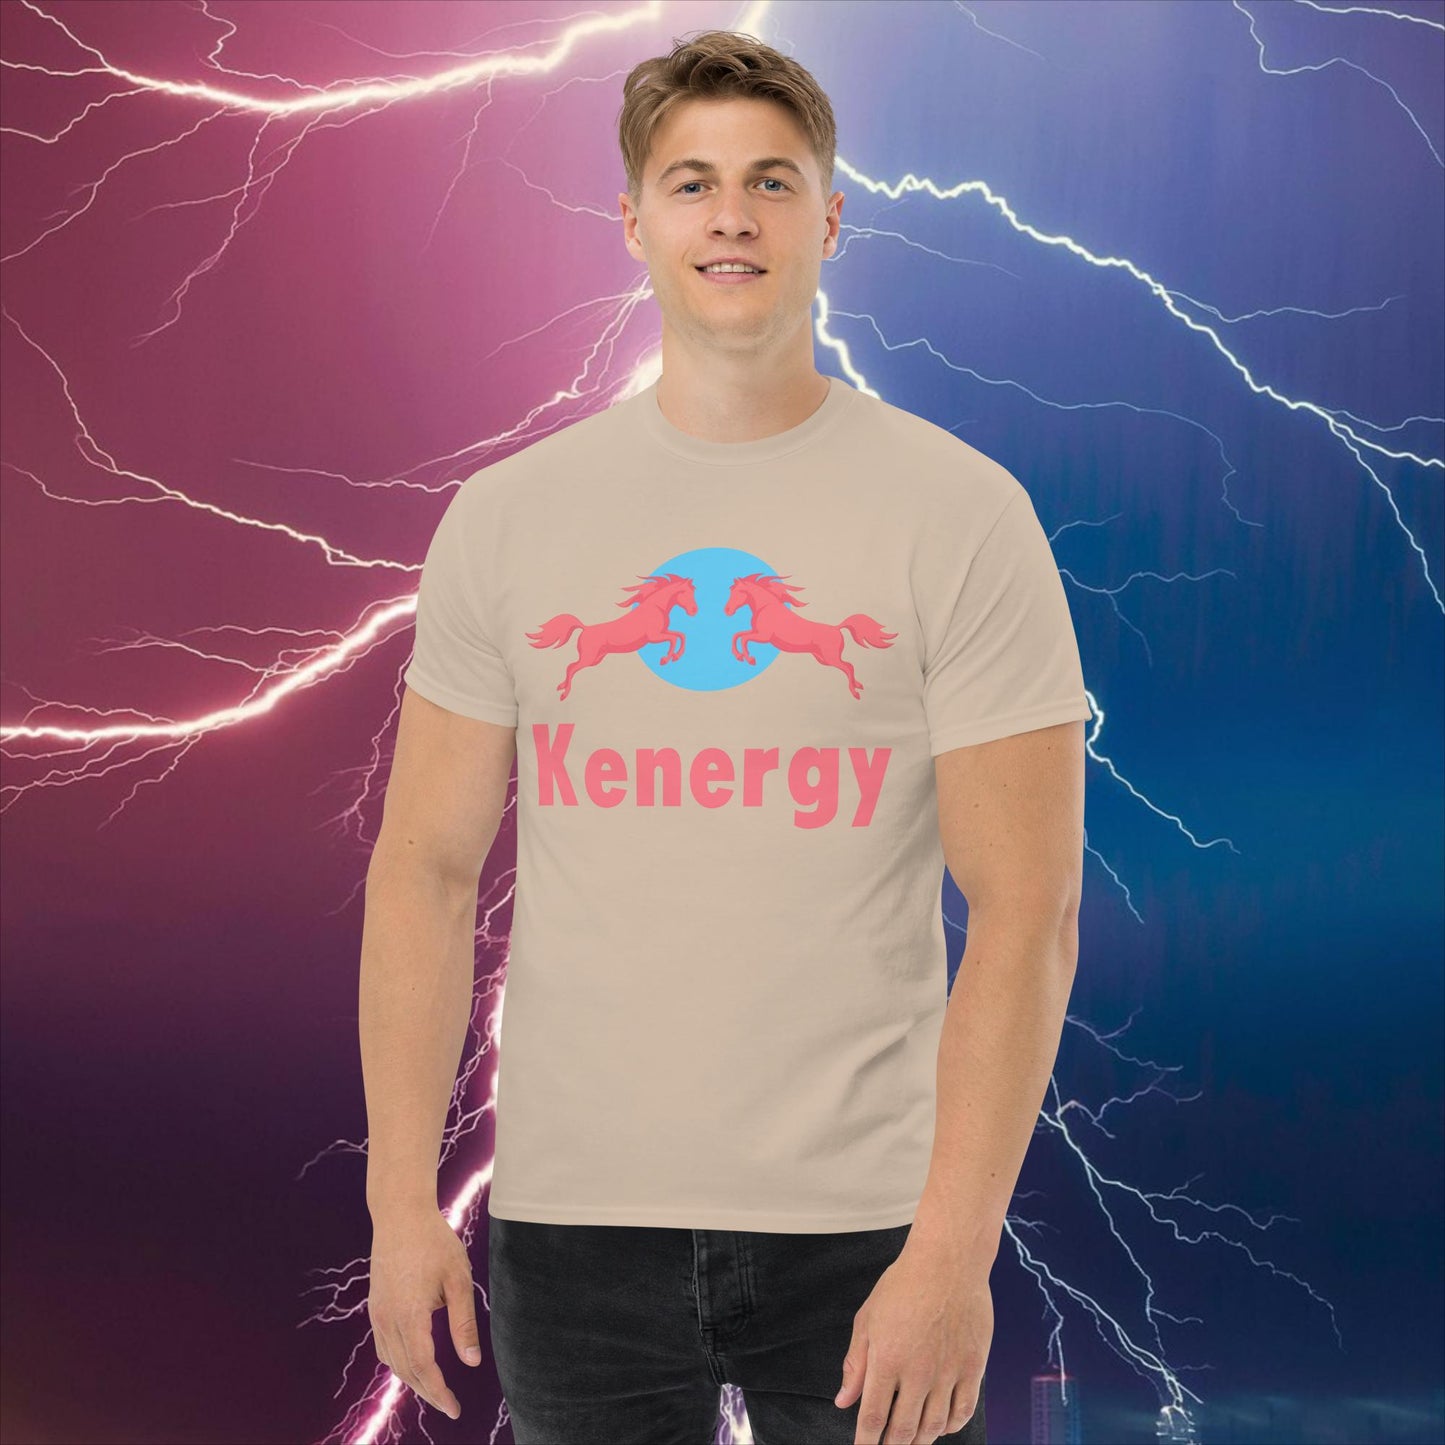 Kenergy Red Bull Ken Barbie Ryan Gosling Kenergy classic tee Next Cult Brand